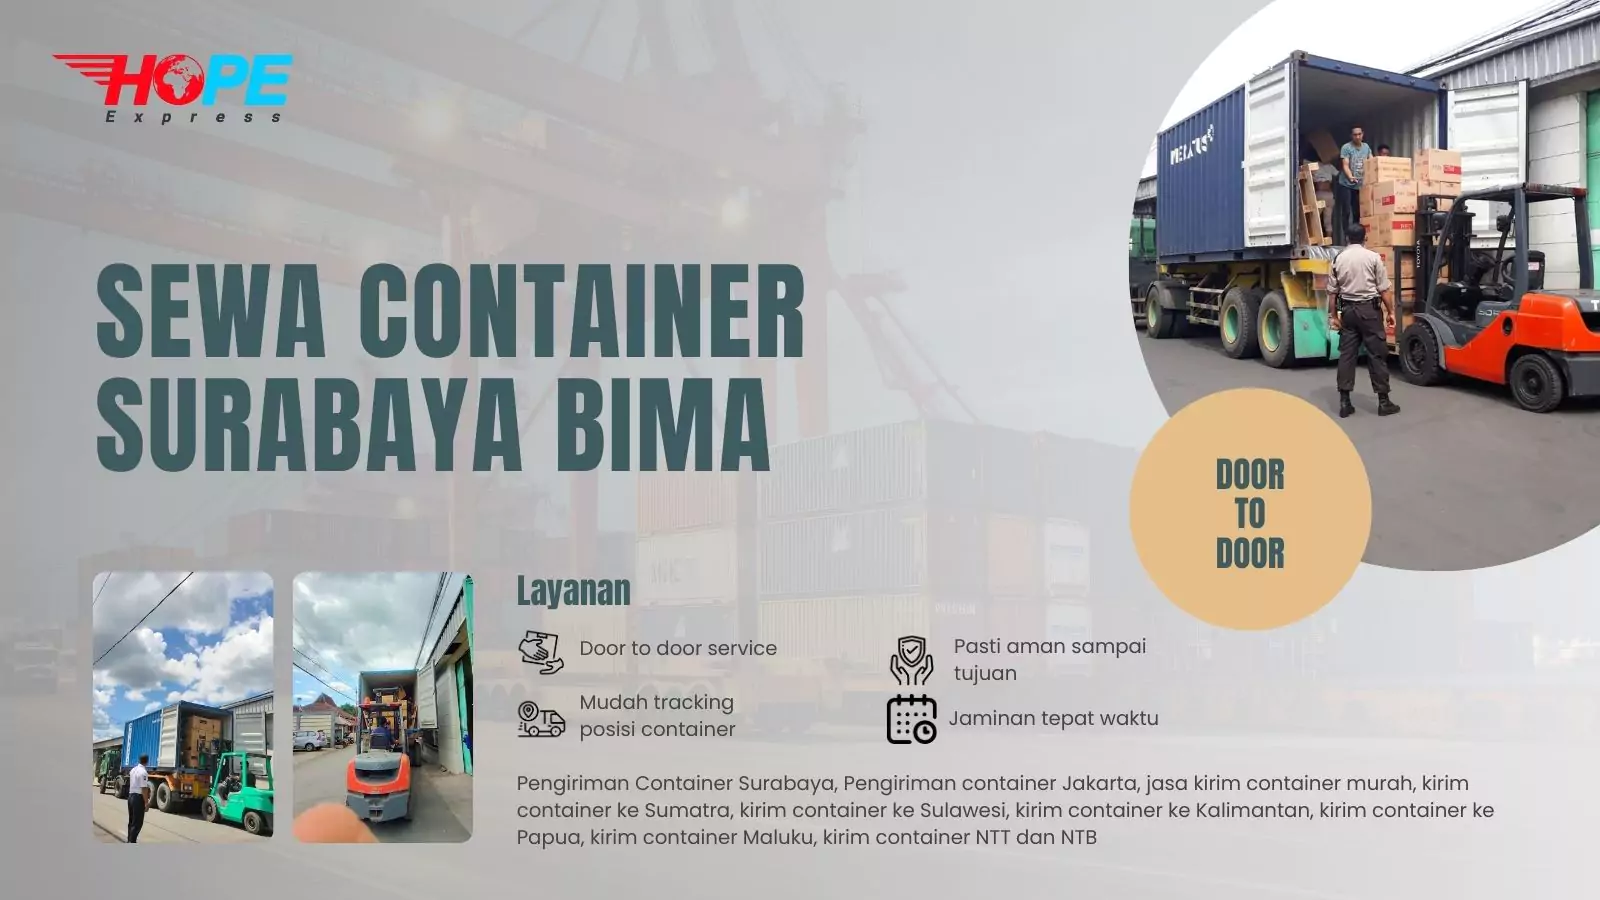 Sewa Container Surabaya Bima